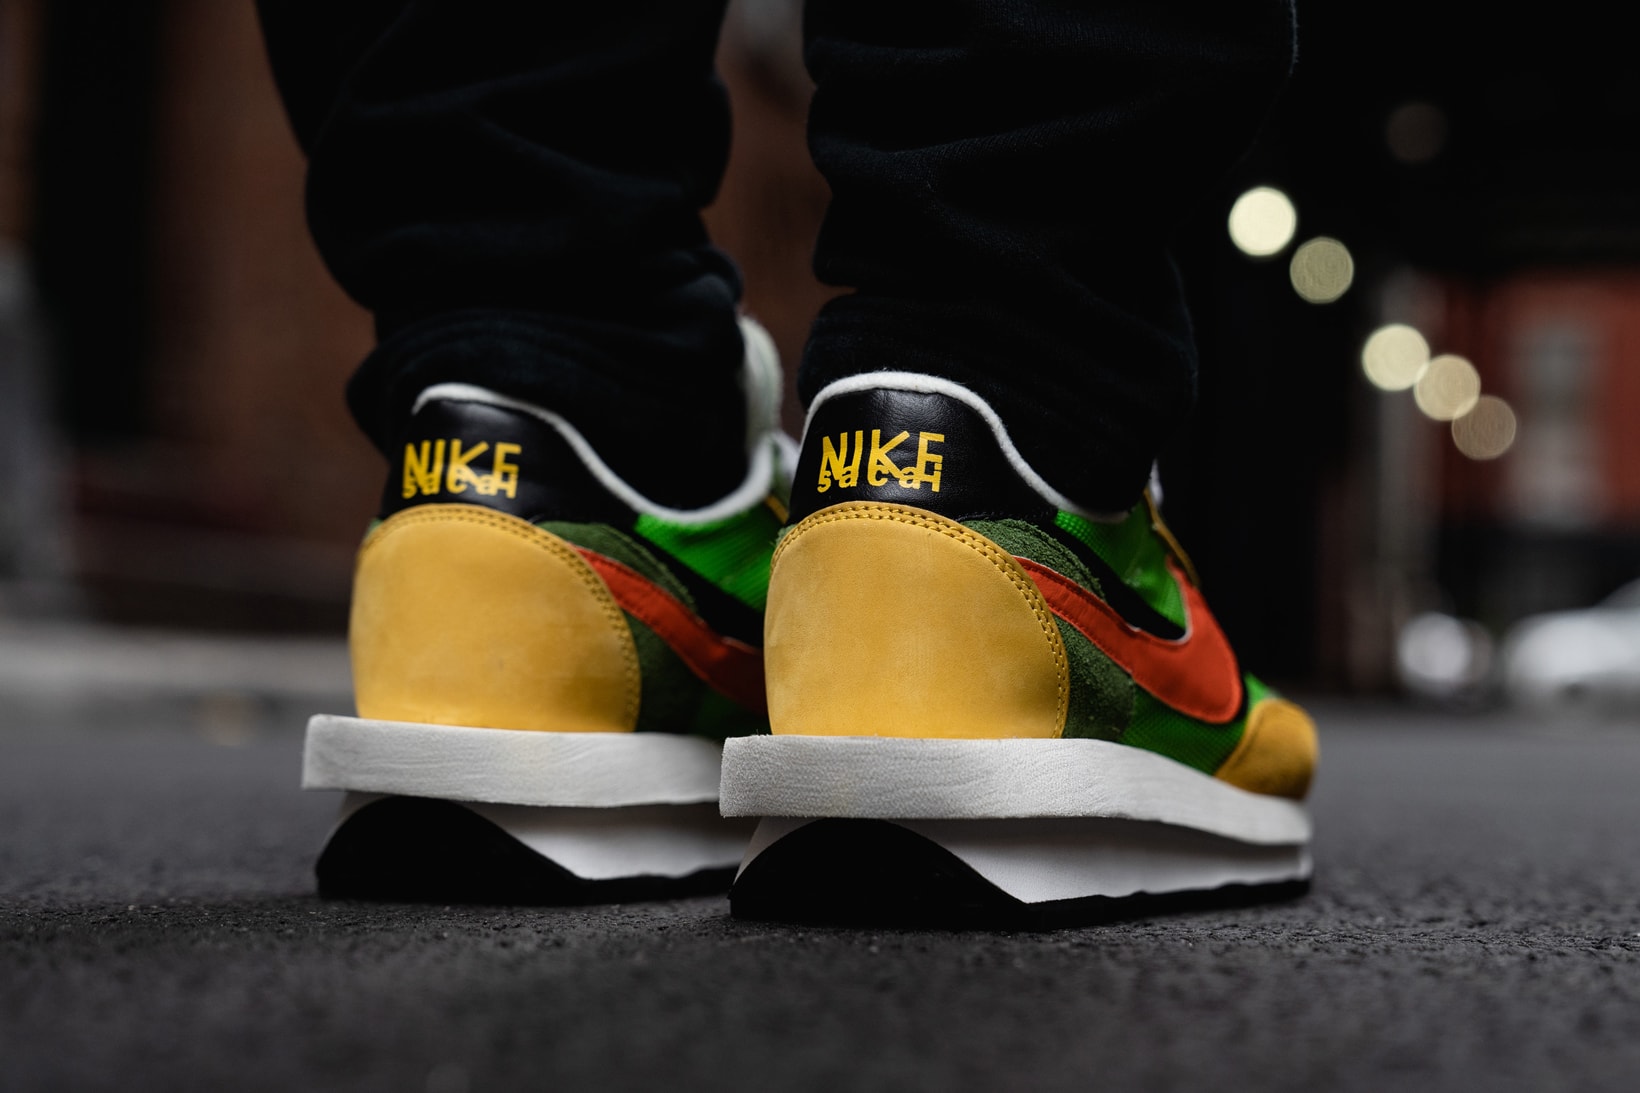 sacai x Nike LDWaffle Daybreak Collaboration Green Yellow Orange